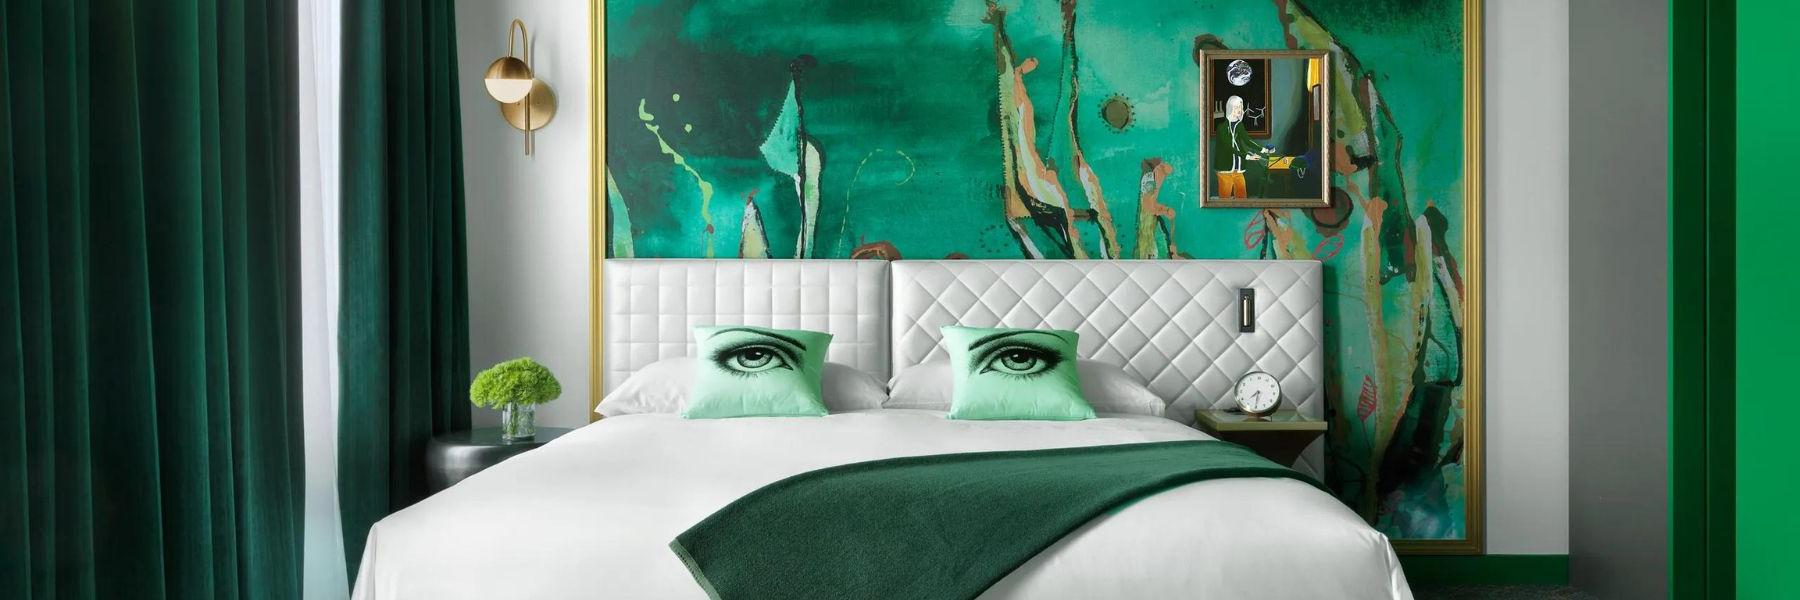 Angad艺术酒店的每个房间都有不同的颜色，比如绿色.